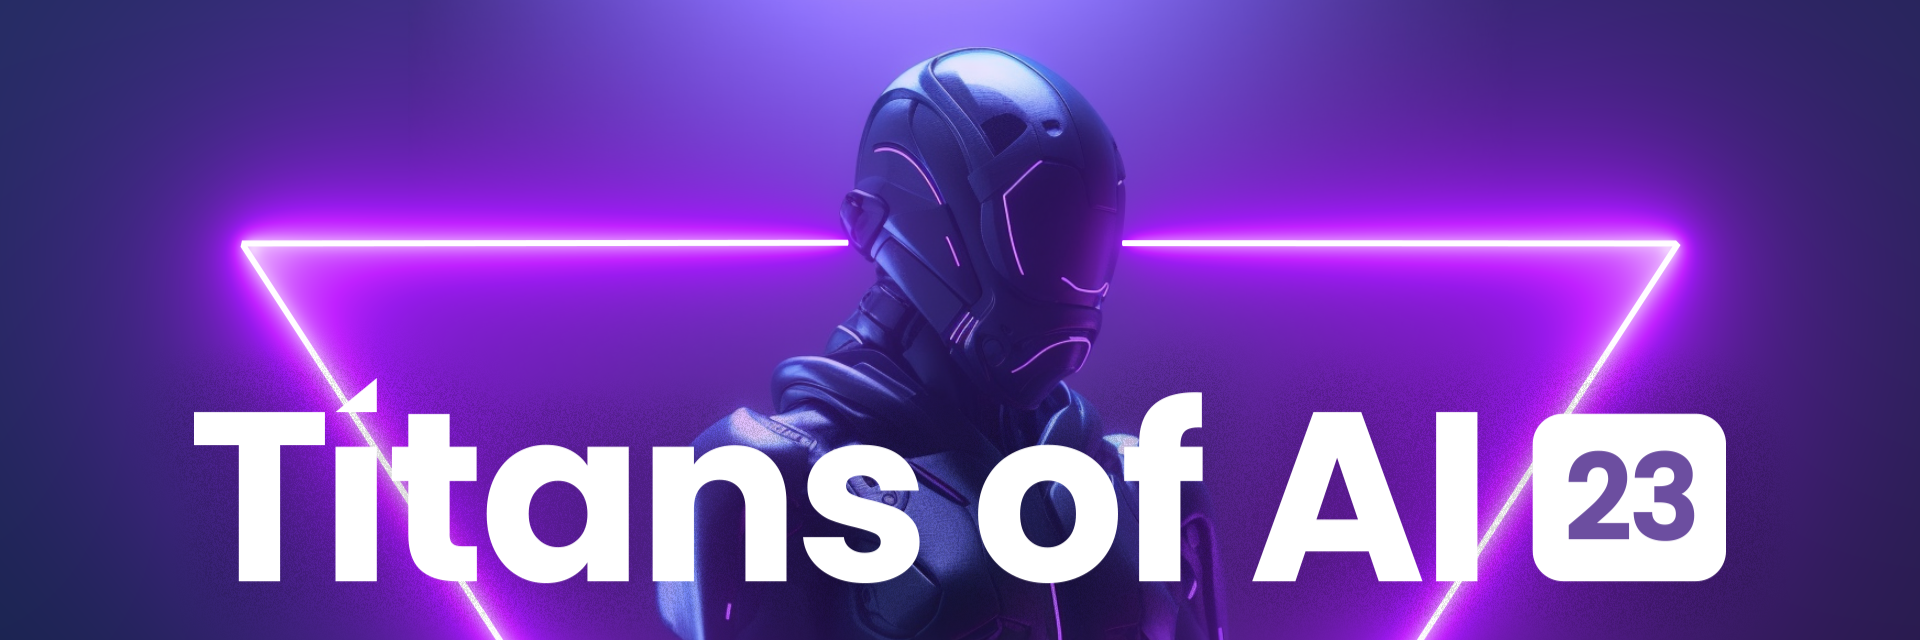 Titans of AI | Sydney